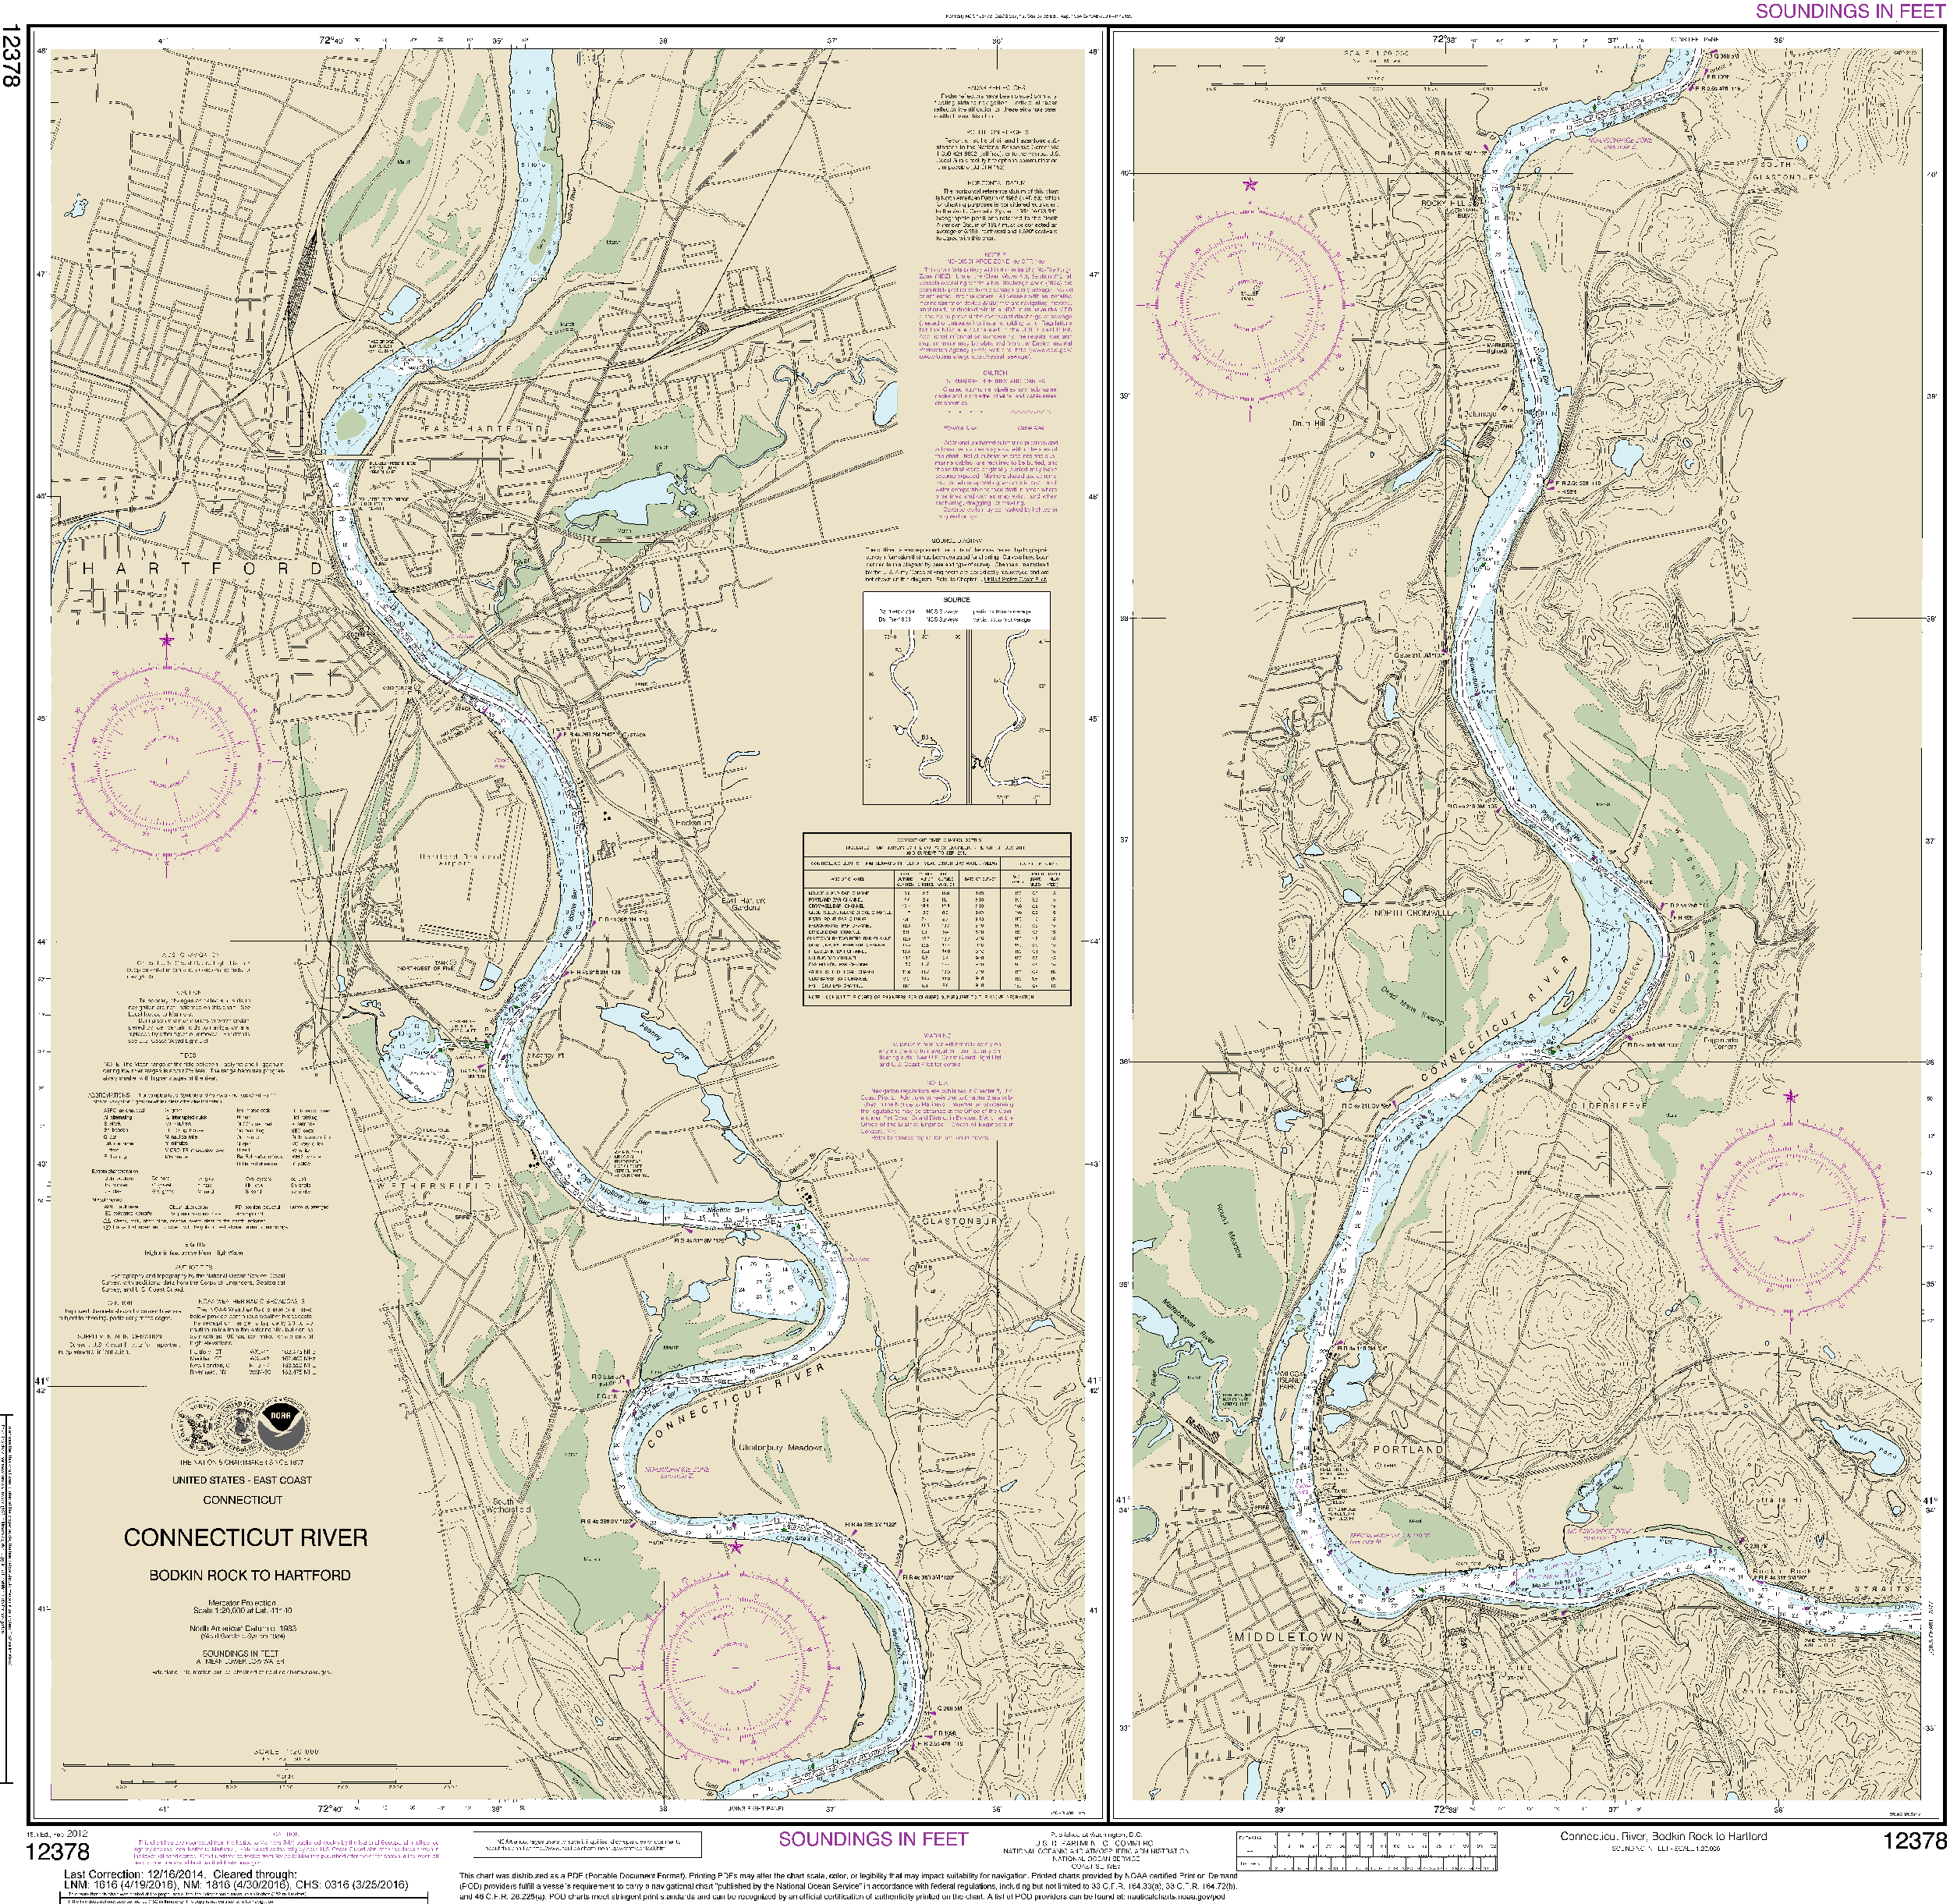 NOAA Nautical Chart 12378: Connecticut River Bodkin Rock to Hartford